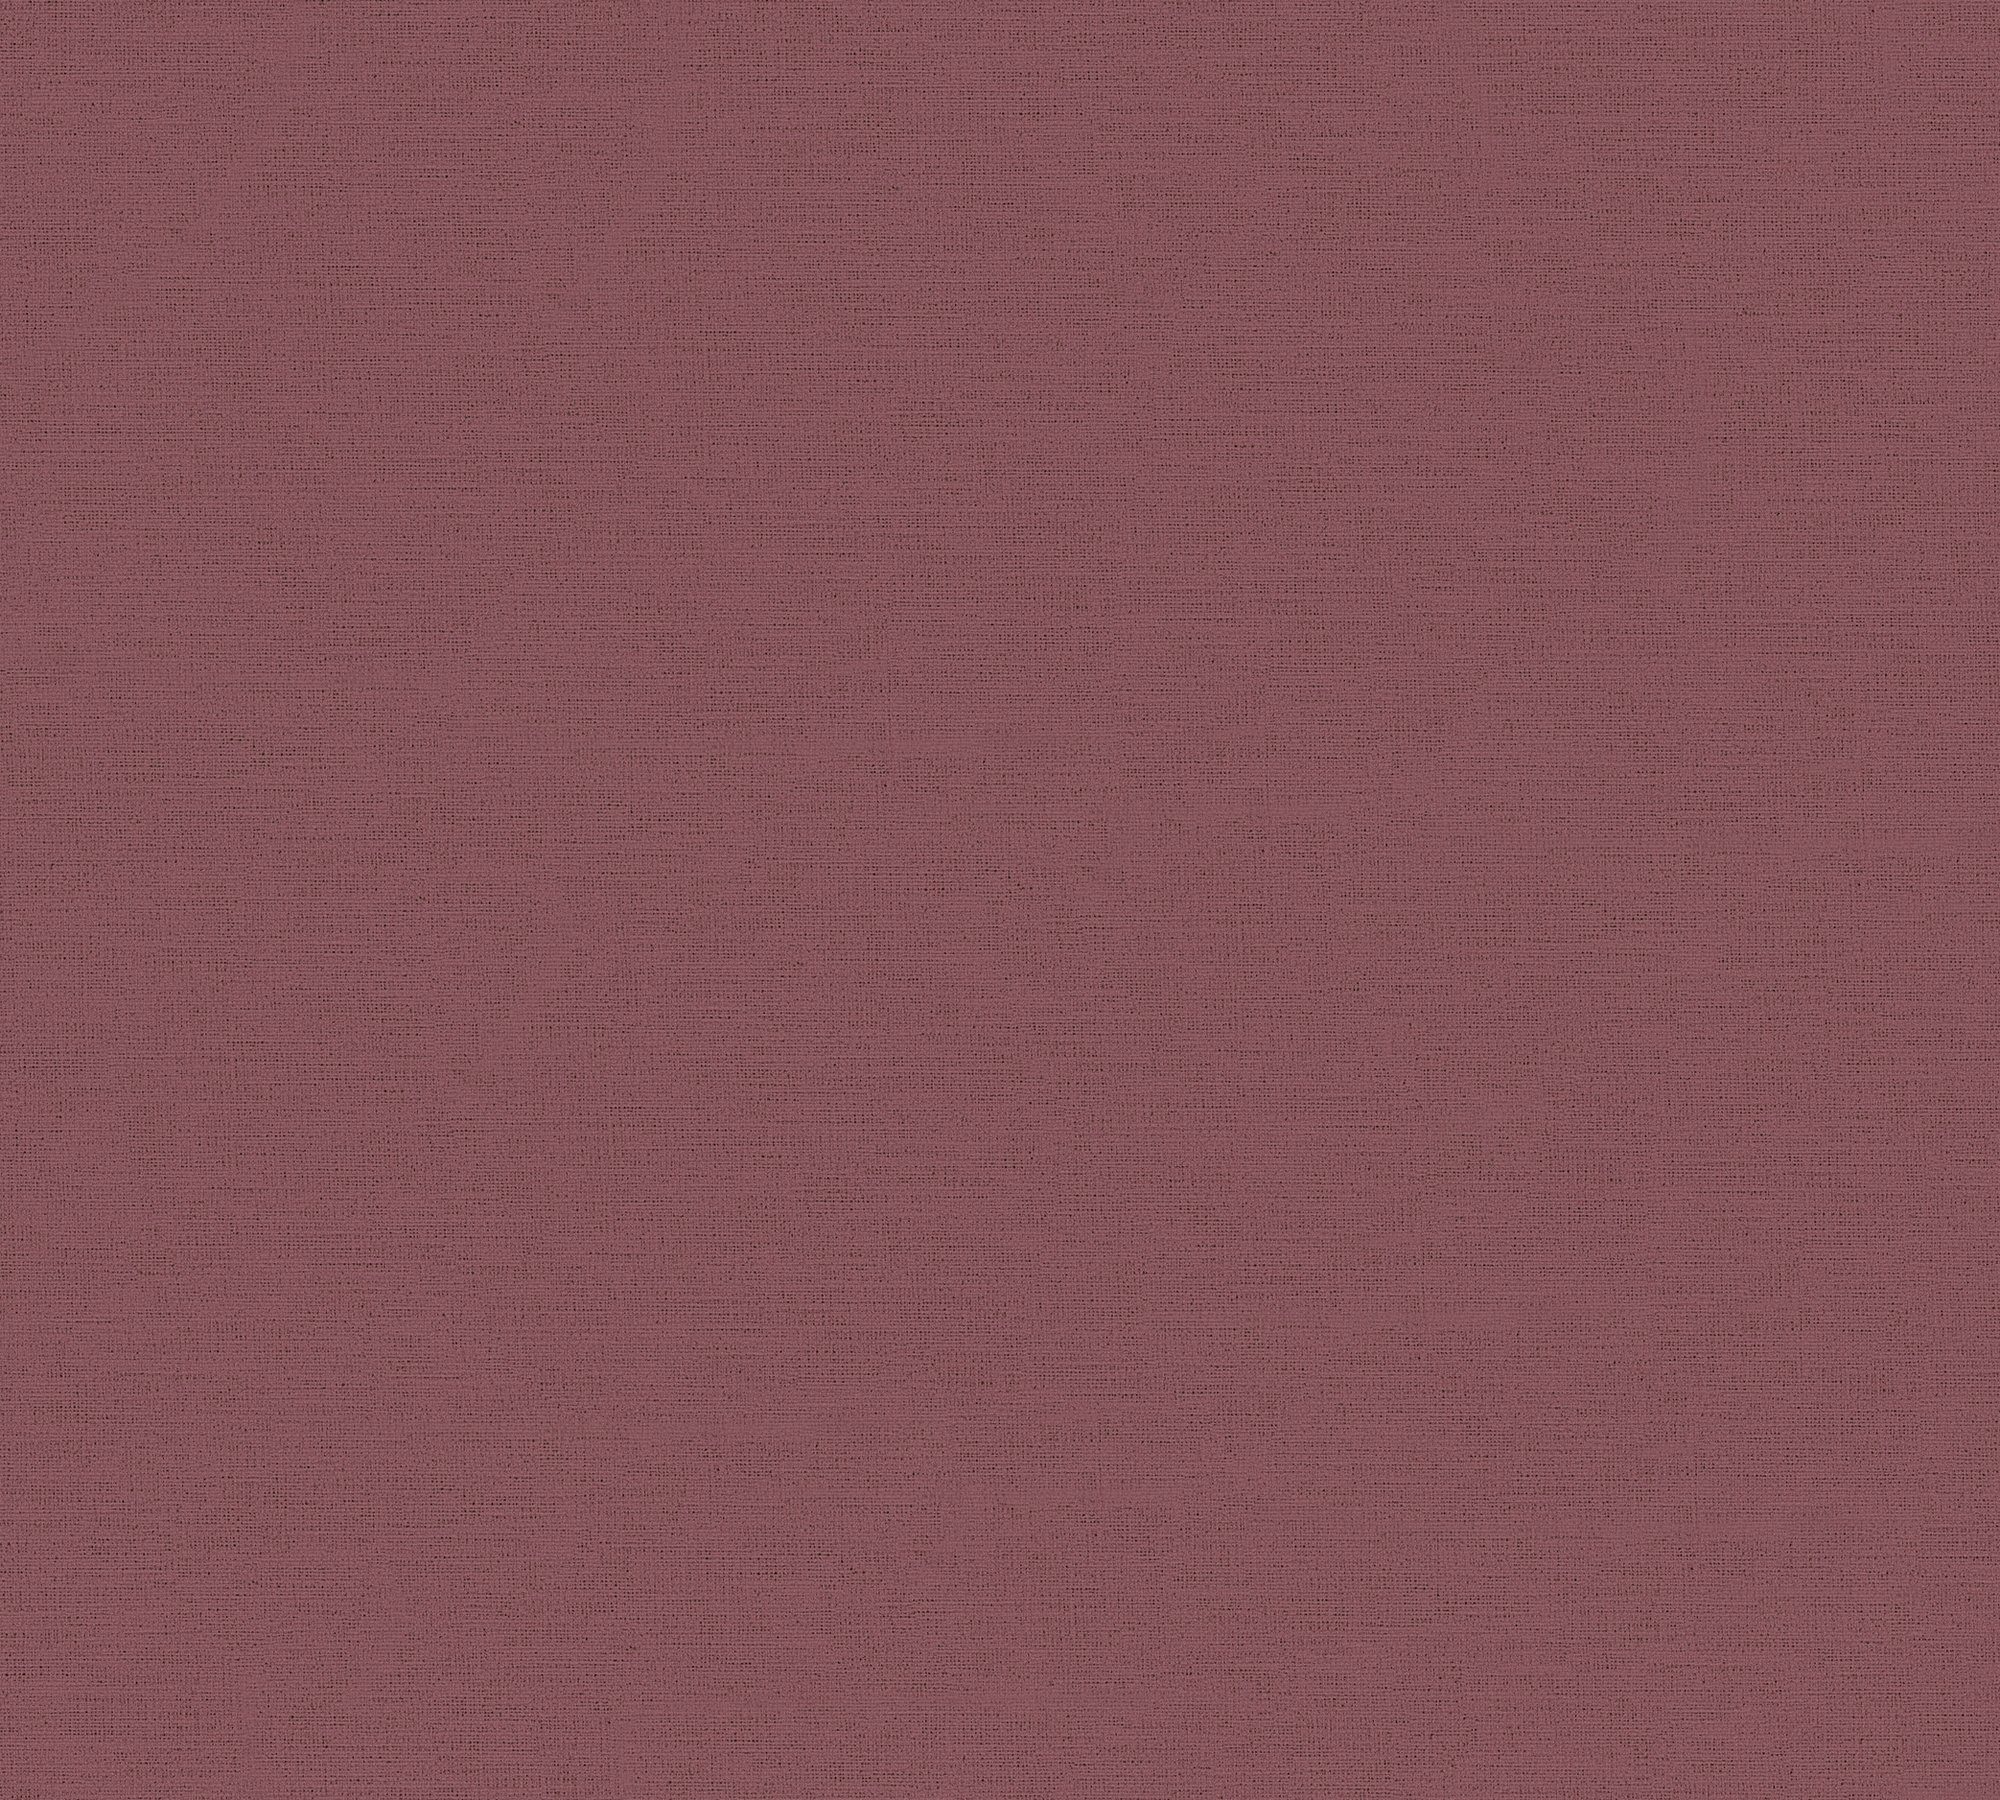 Tapete, einfarbige matt, leicht strukturiert Antigua violett,lila,bordeaux St), Vliestapete geprägt, A.S. Création (1 Unitapete